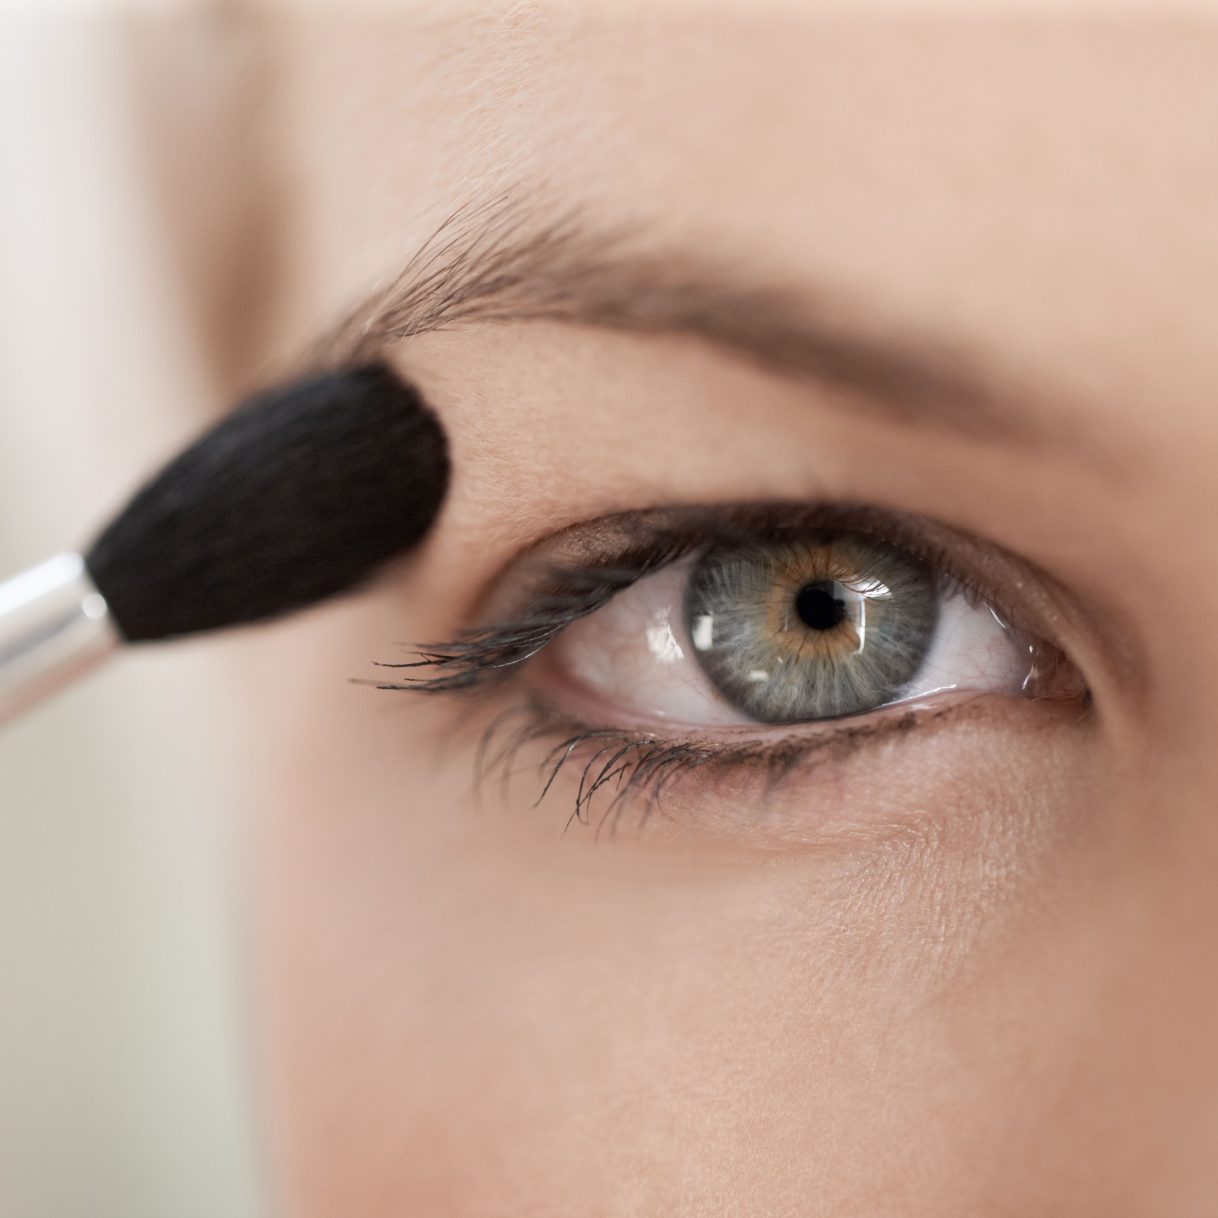 Best Makeup For Hooded Eyes Makeup Tricks For Hooded Eyes Hooded Eyes Makeup Tips And Tricks